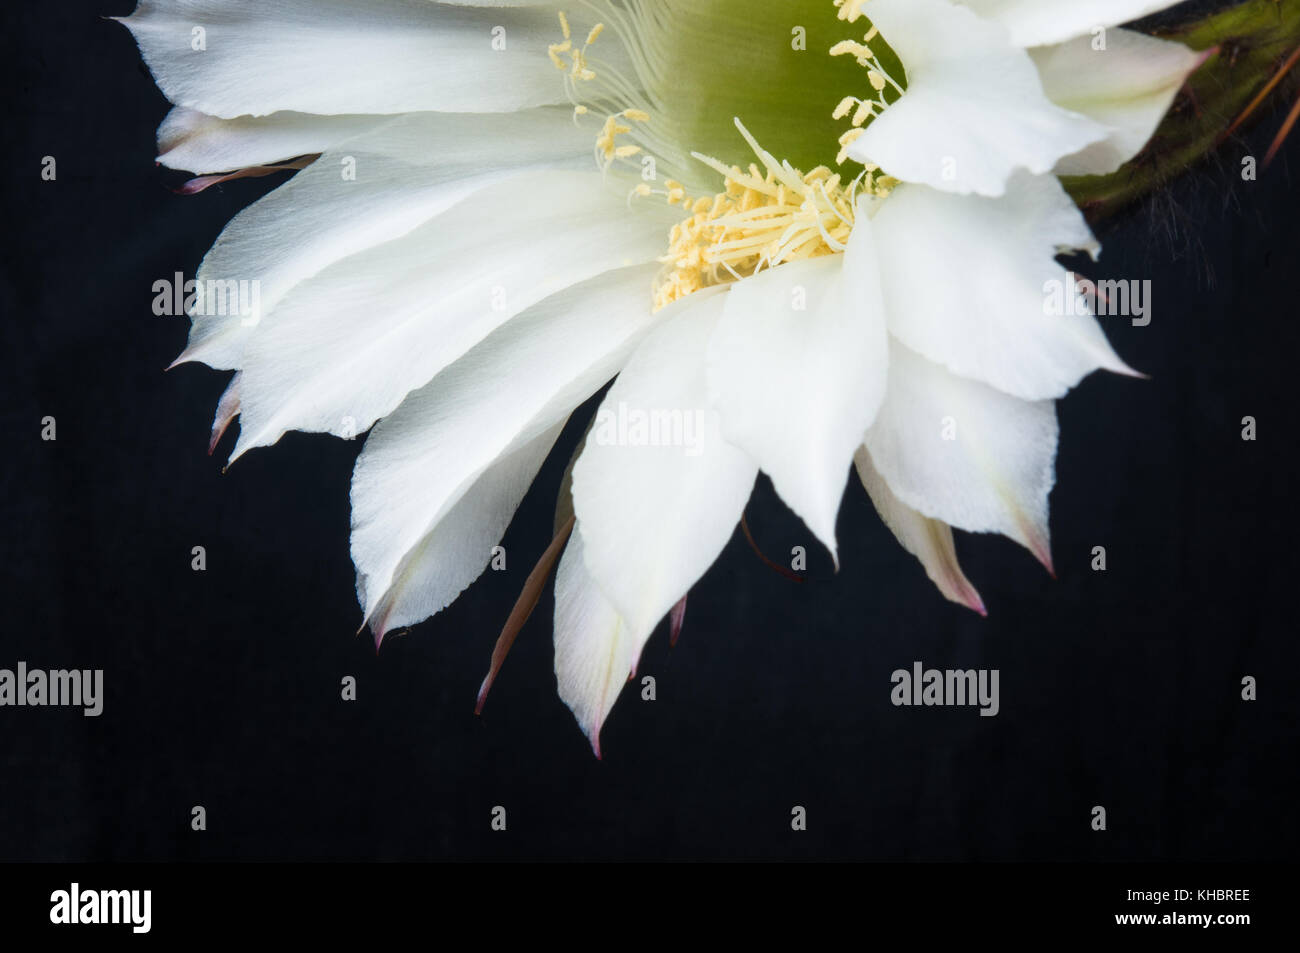 Cactus flowers echinopsis tubiflora, selective focus, black background Stock Photo